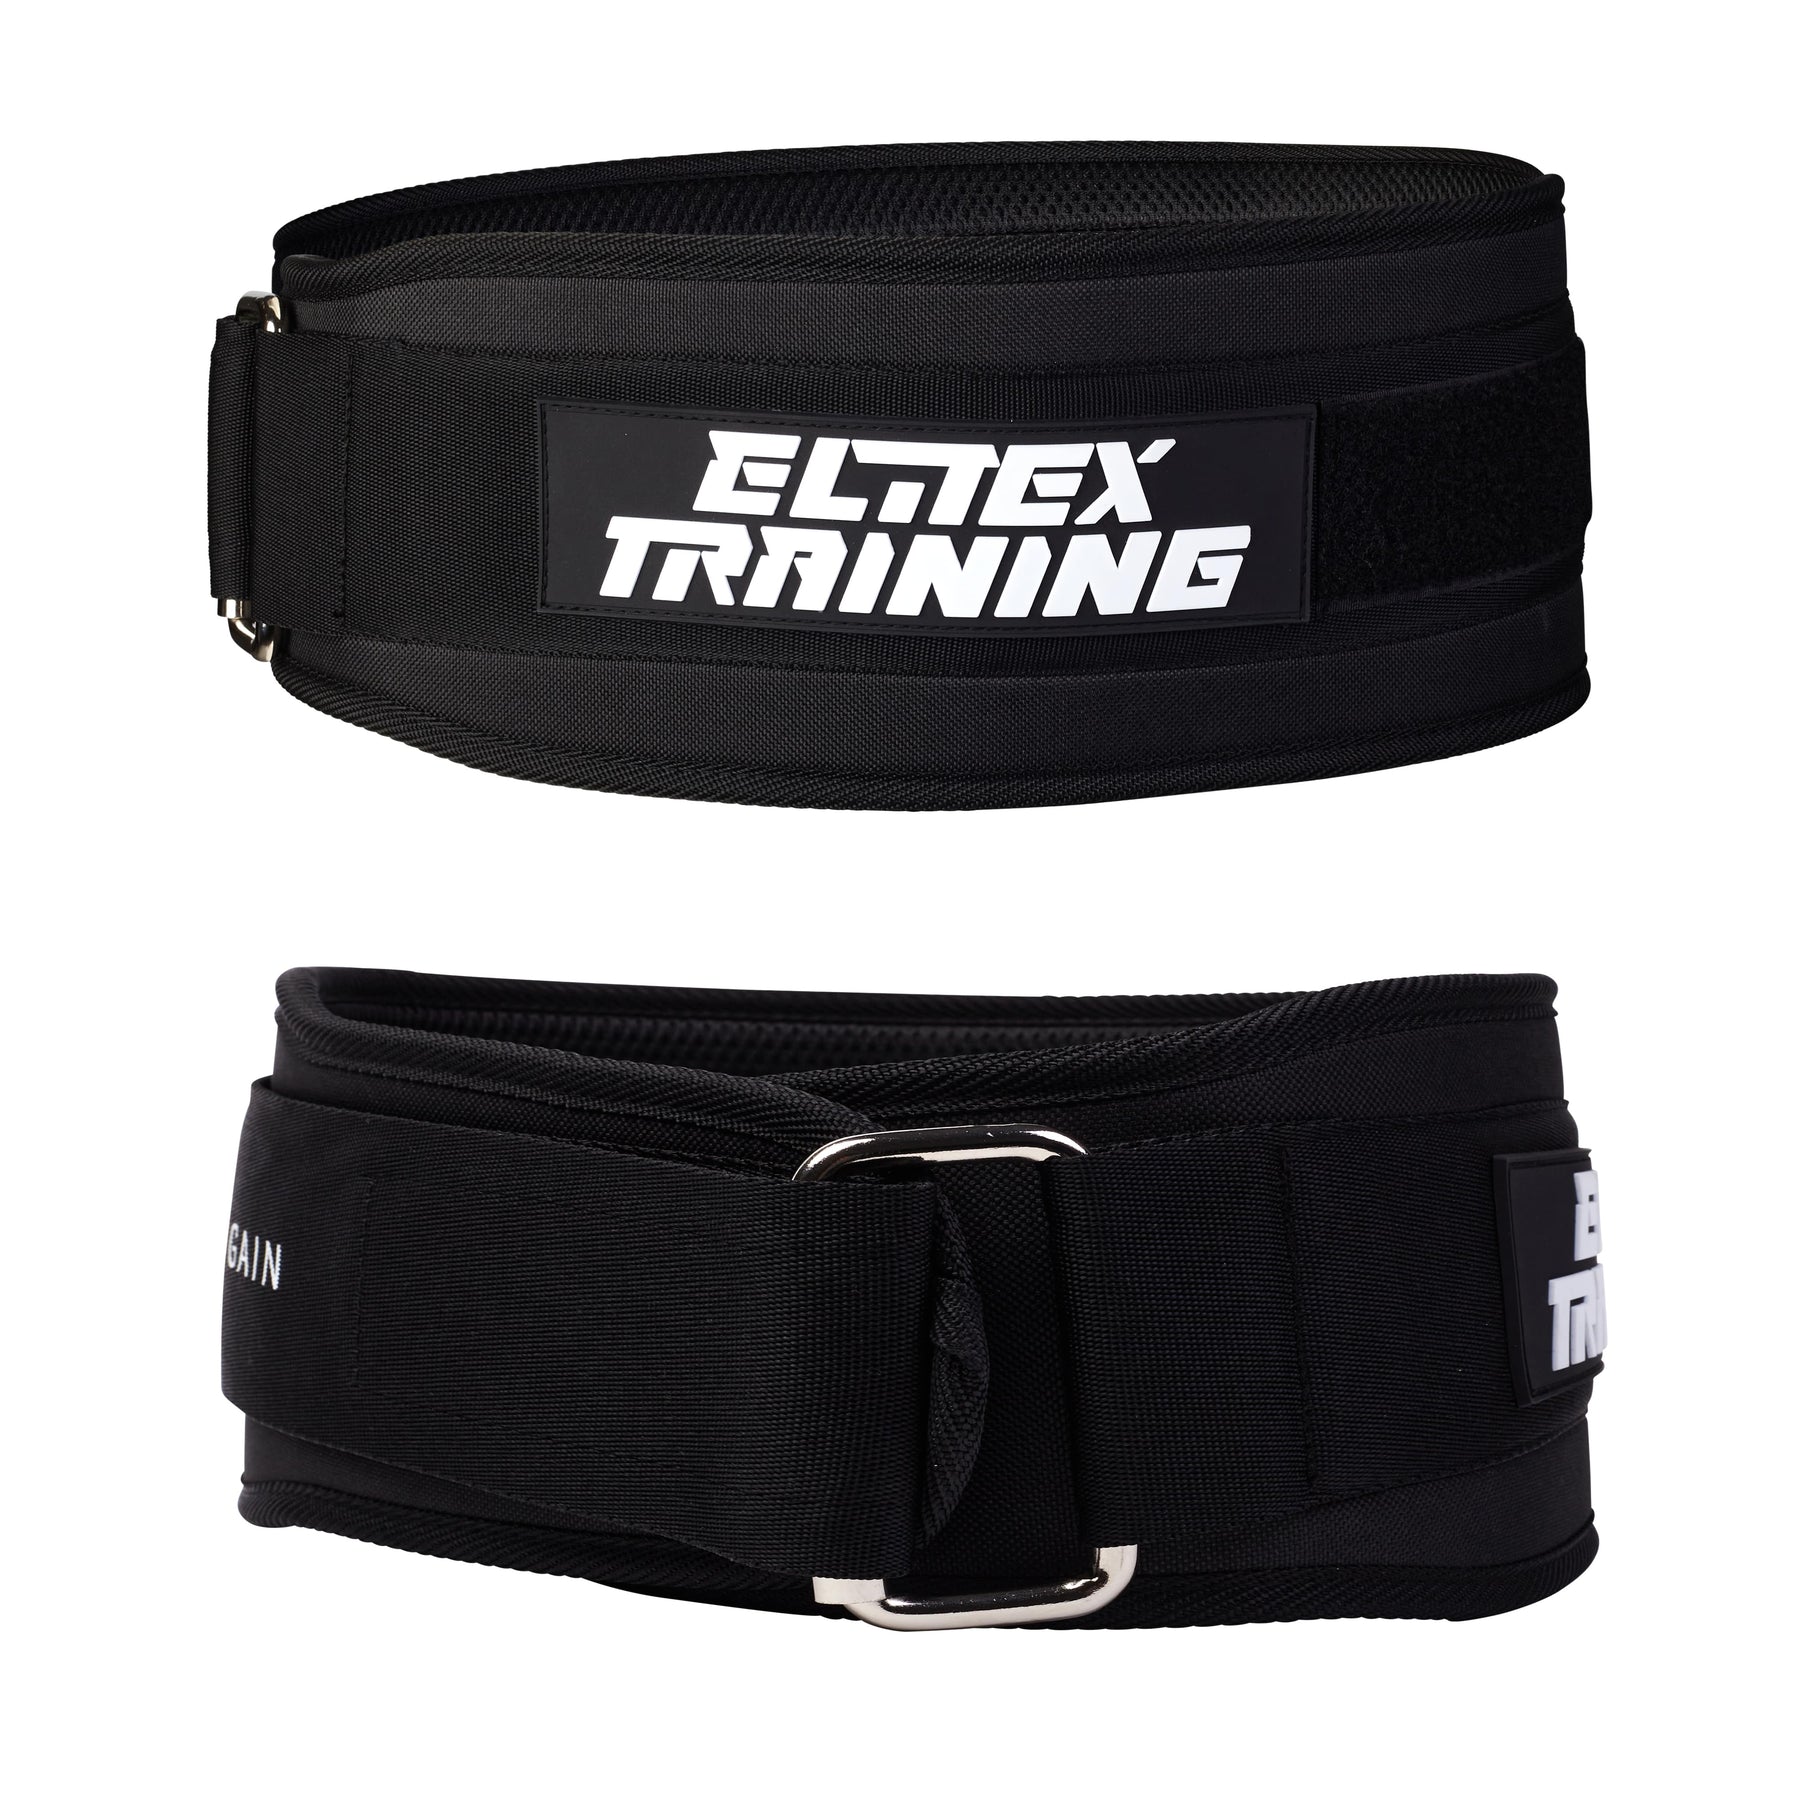 Cinturón Lumbar – Elitex Training